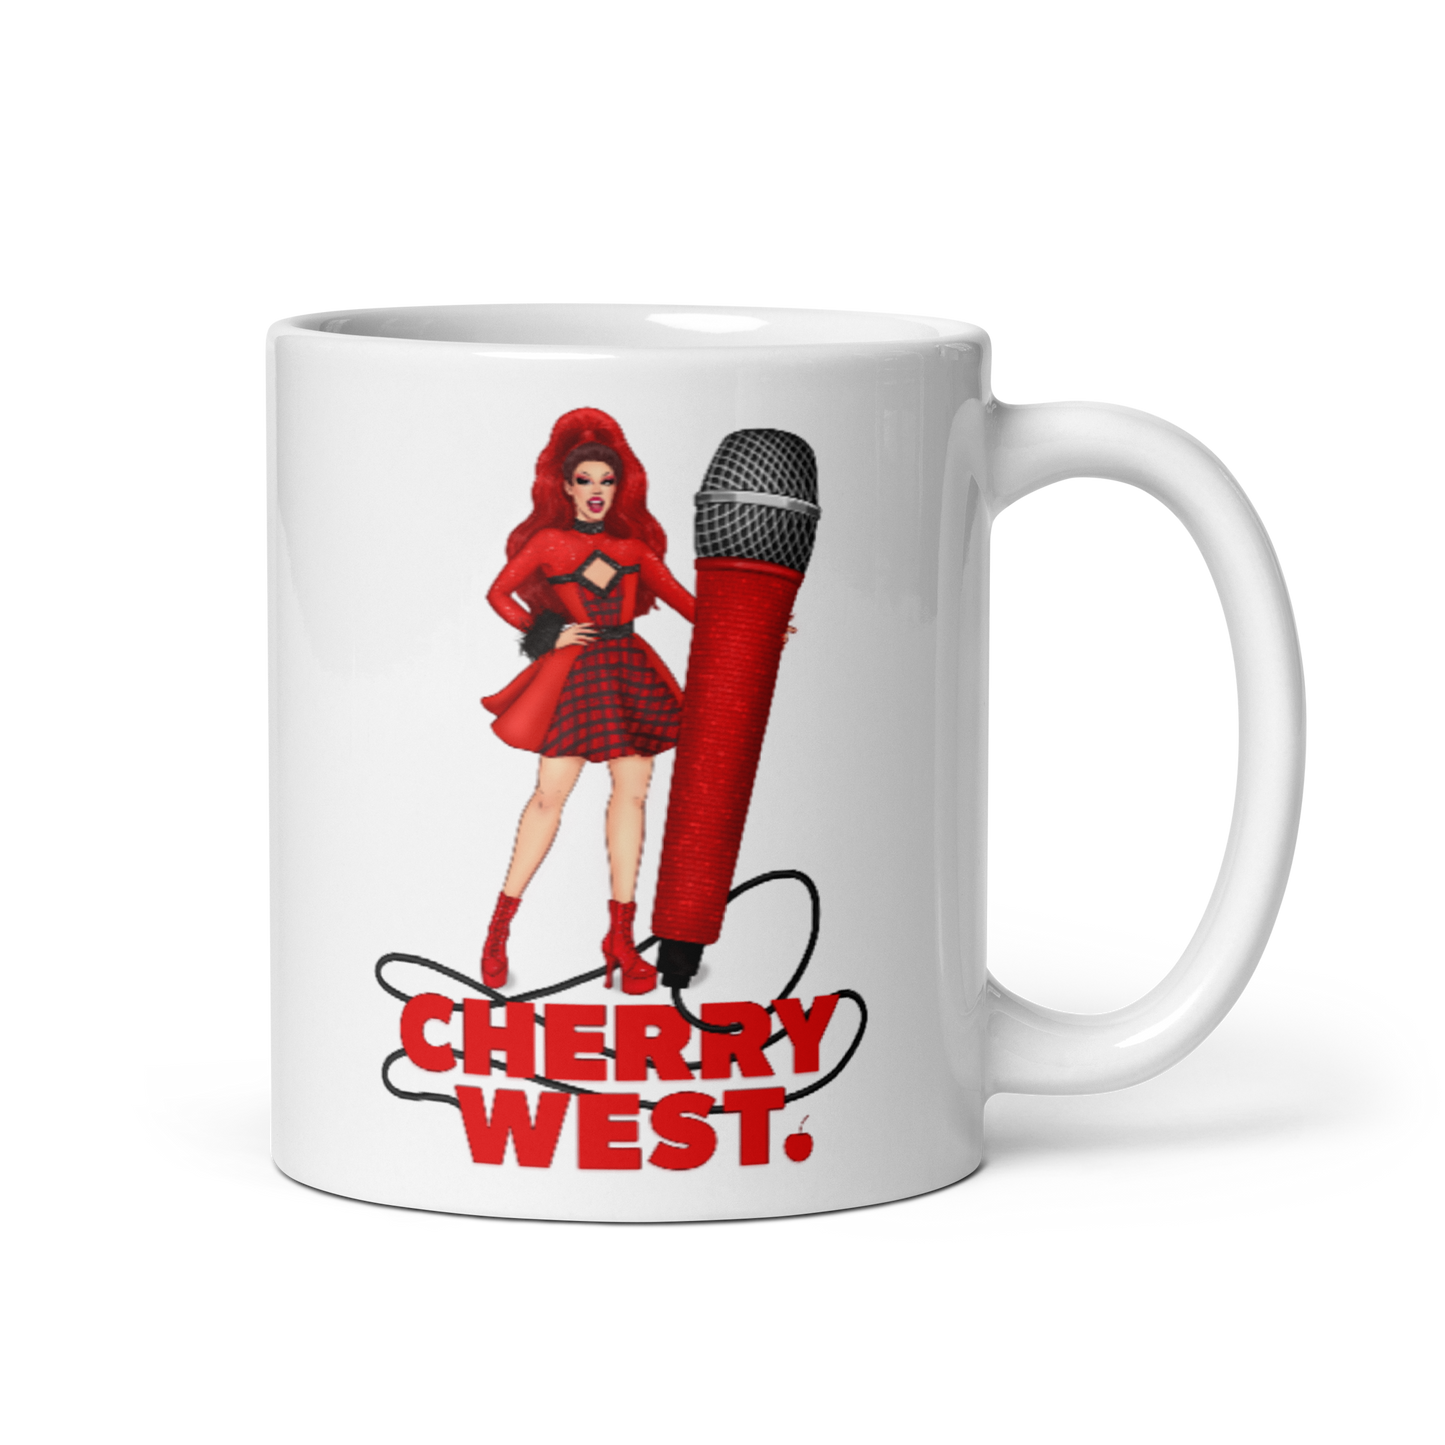 Cherry West Microphone Mug